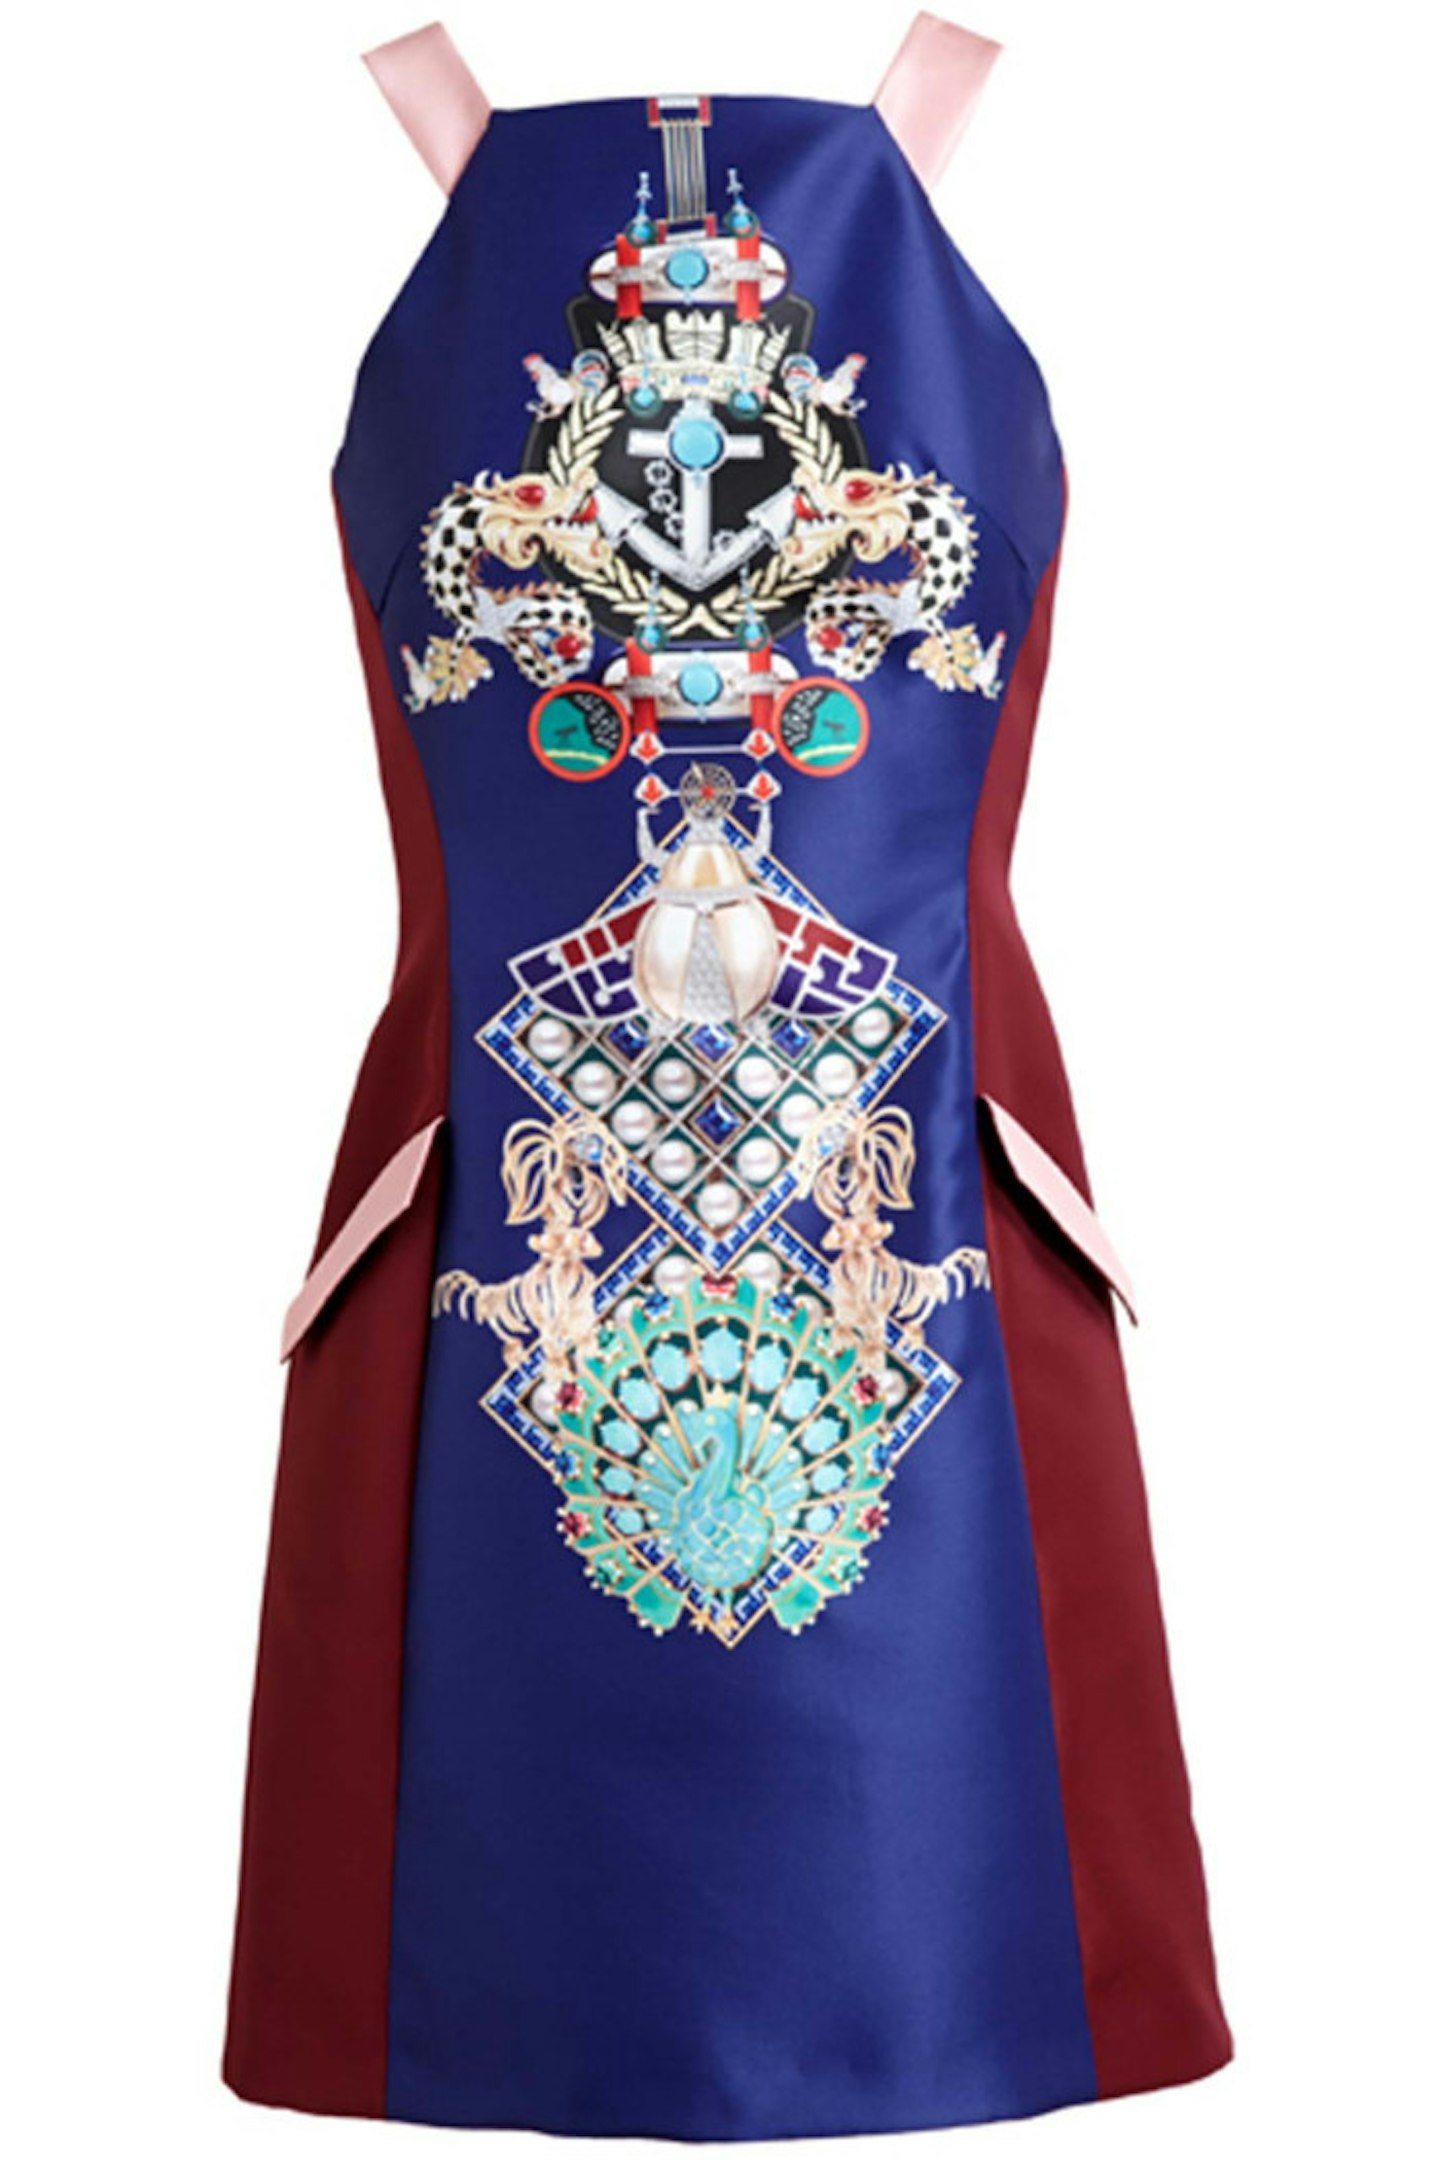 1. Totem Print Dress, £1240, Mary Katrantzou at Browns Fashion